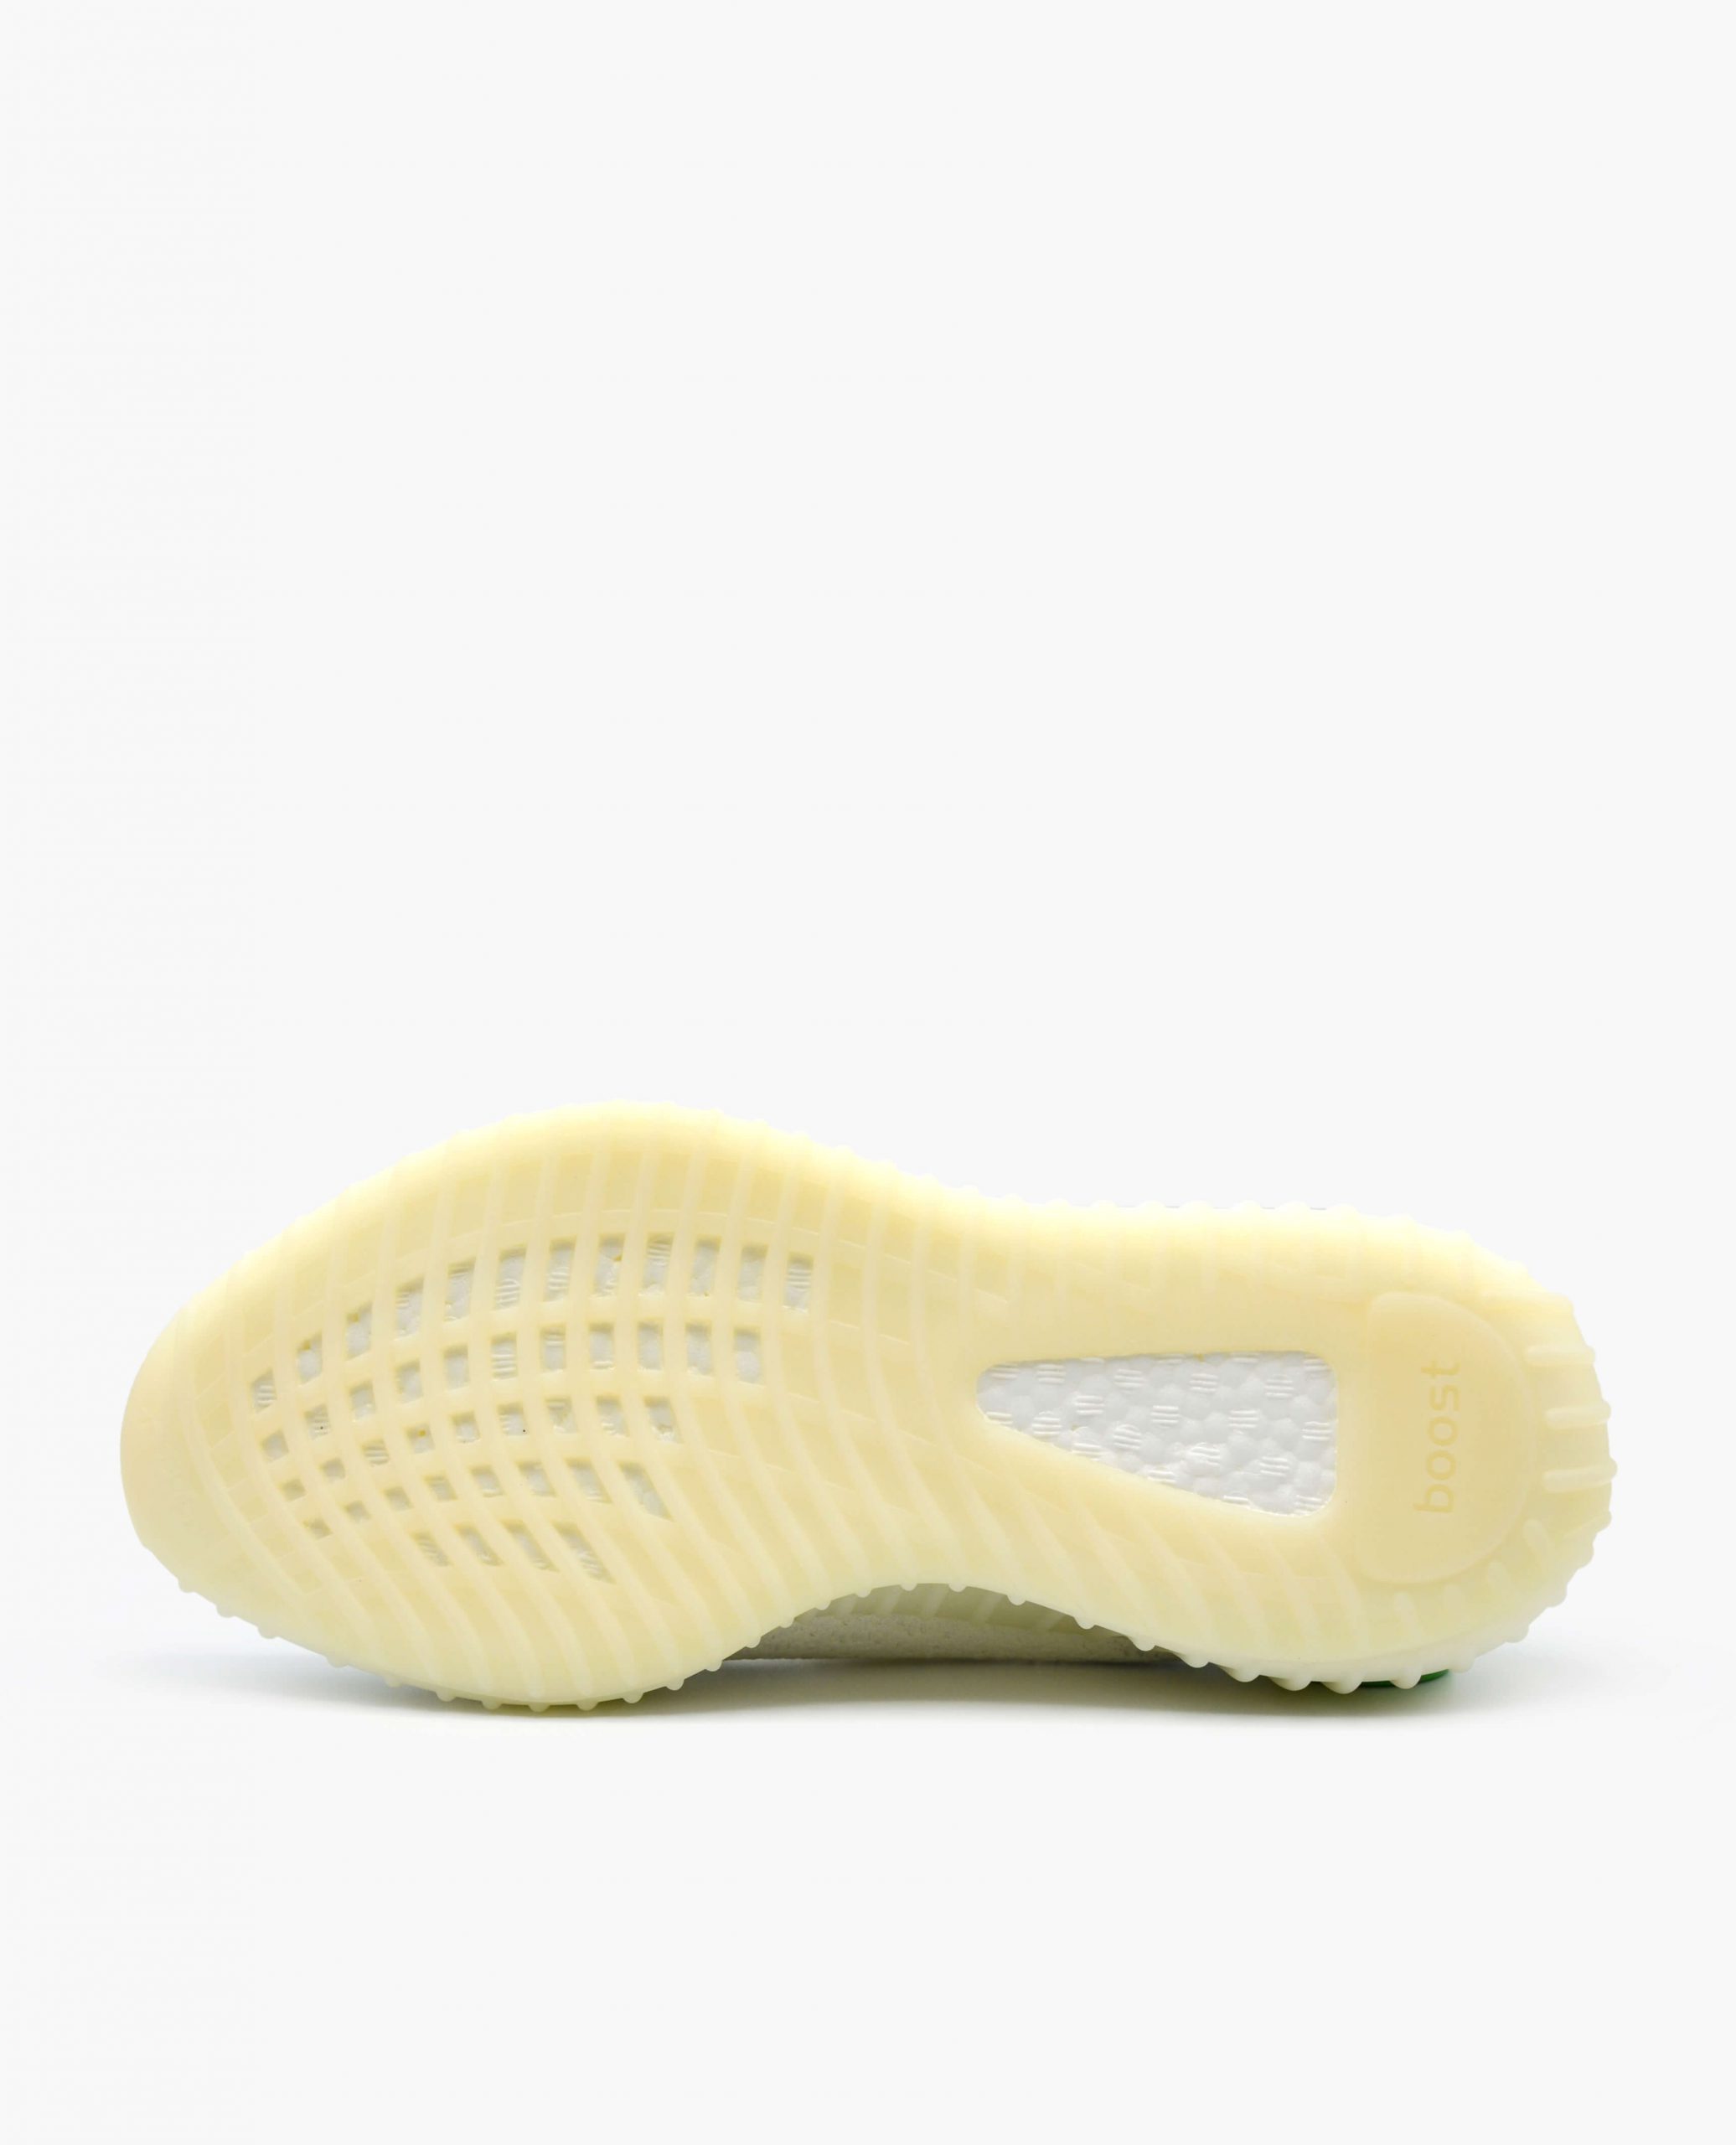 Adidas Yeezy Boost V2 Cream/Triple White Kick Louder